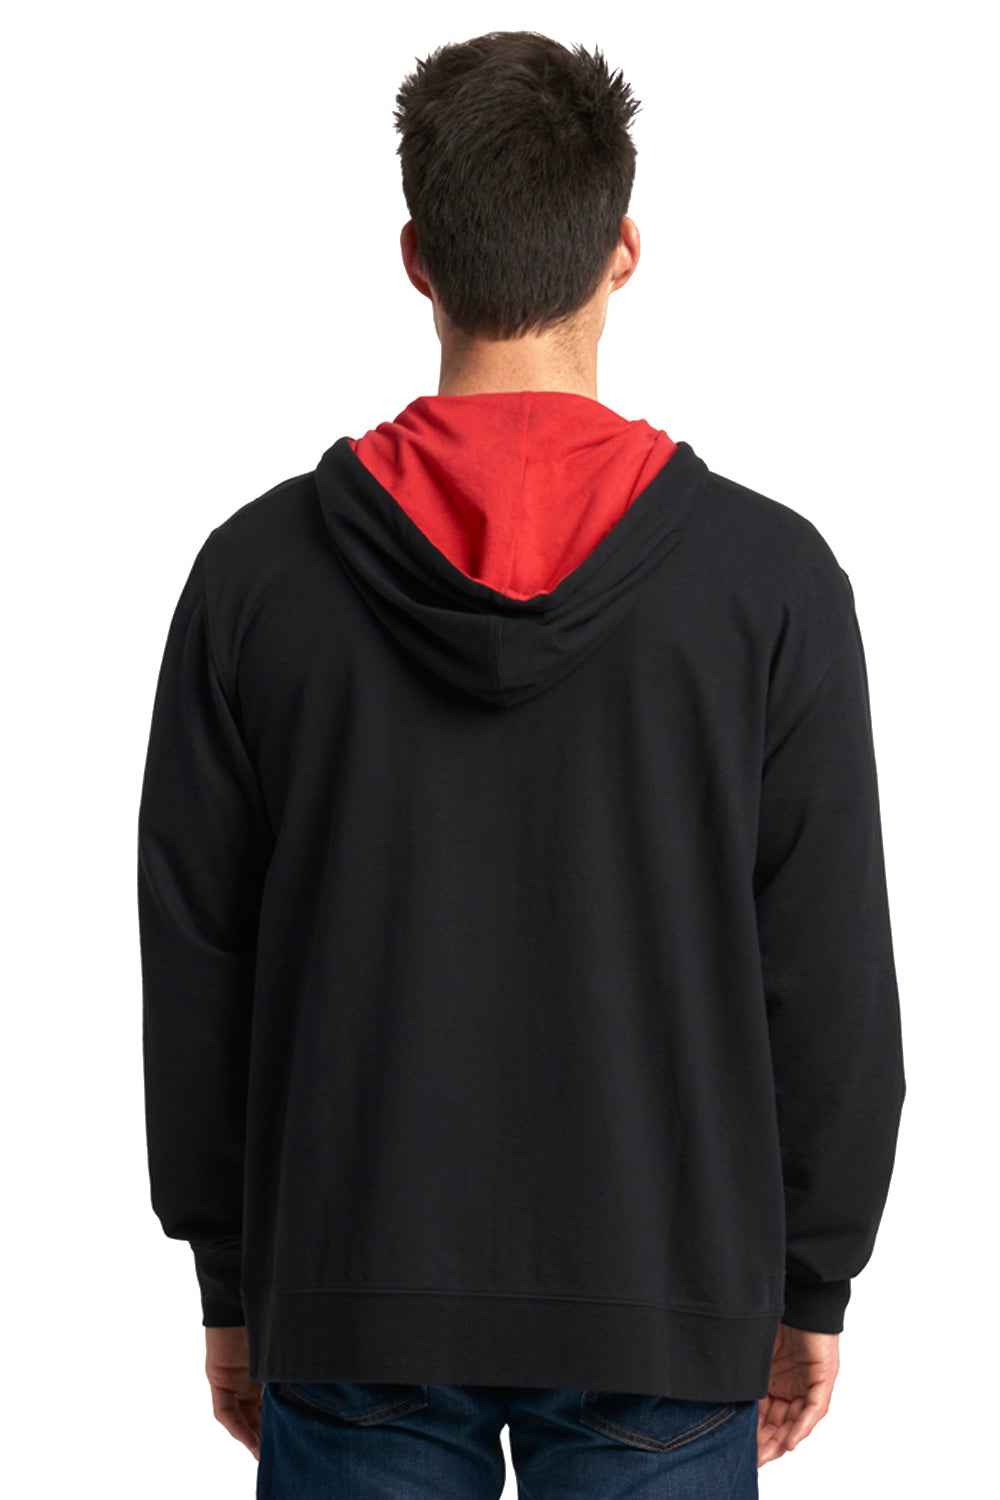 Next Level 9601 French Terry Fleece Full Zip Hooded Sweatshirt Hoodie Black/Red Back